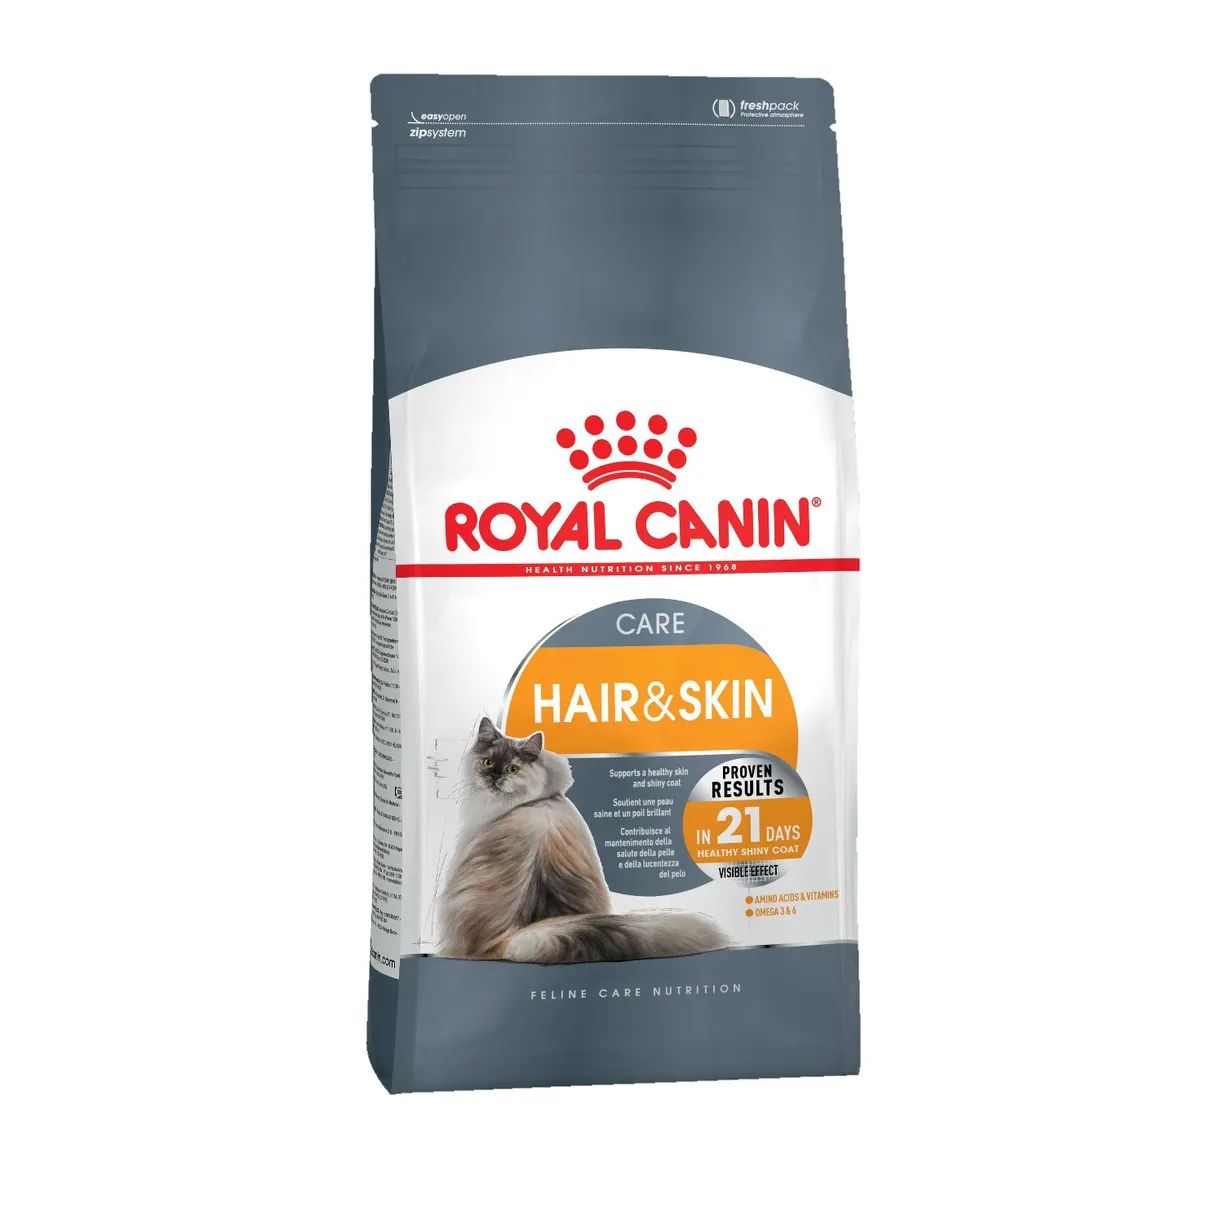 Сухой корм для кошек ROYAL CANIN Hair & Skin Care, для кожи и шерсти, 0,4кг